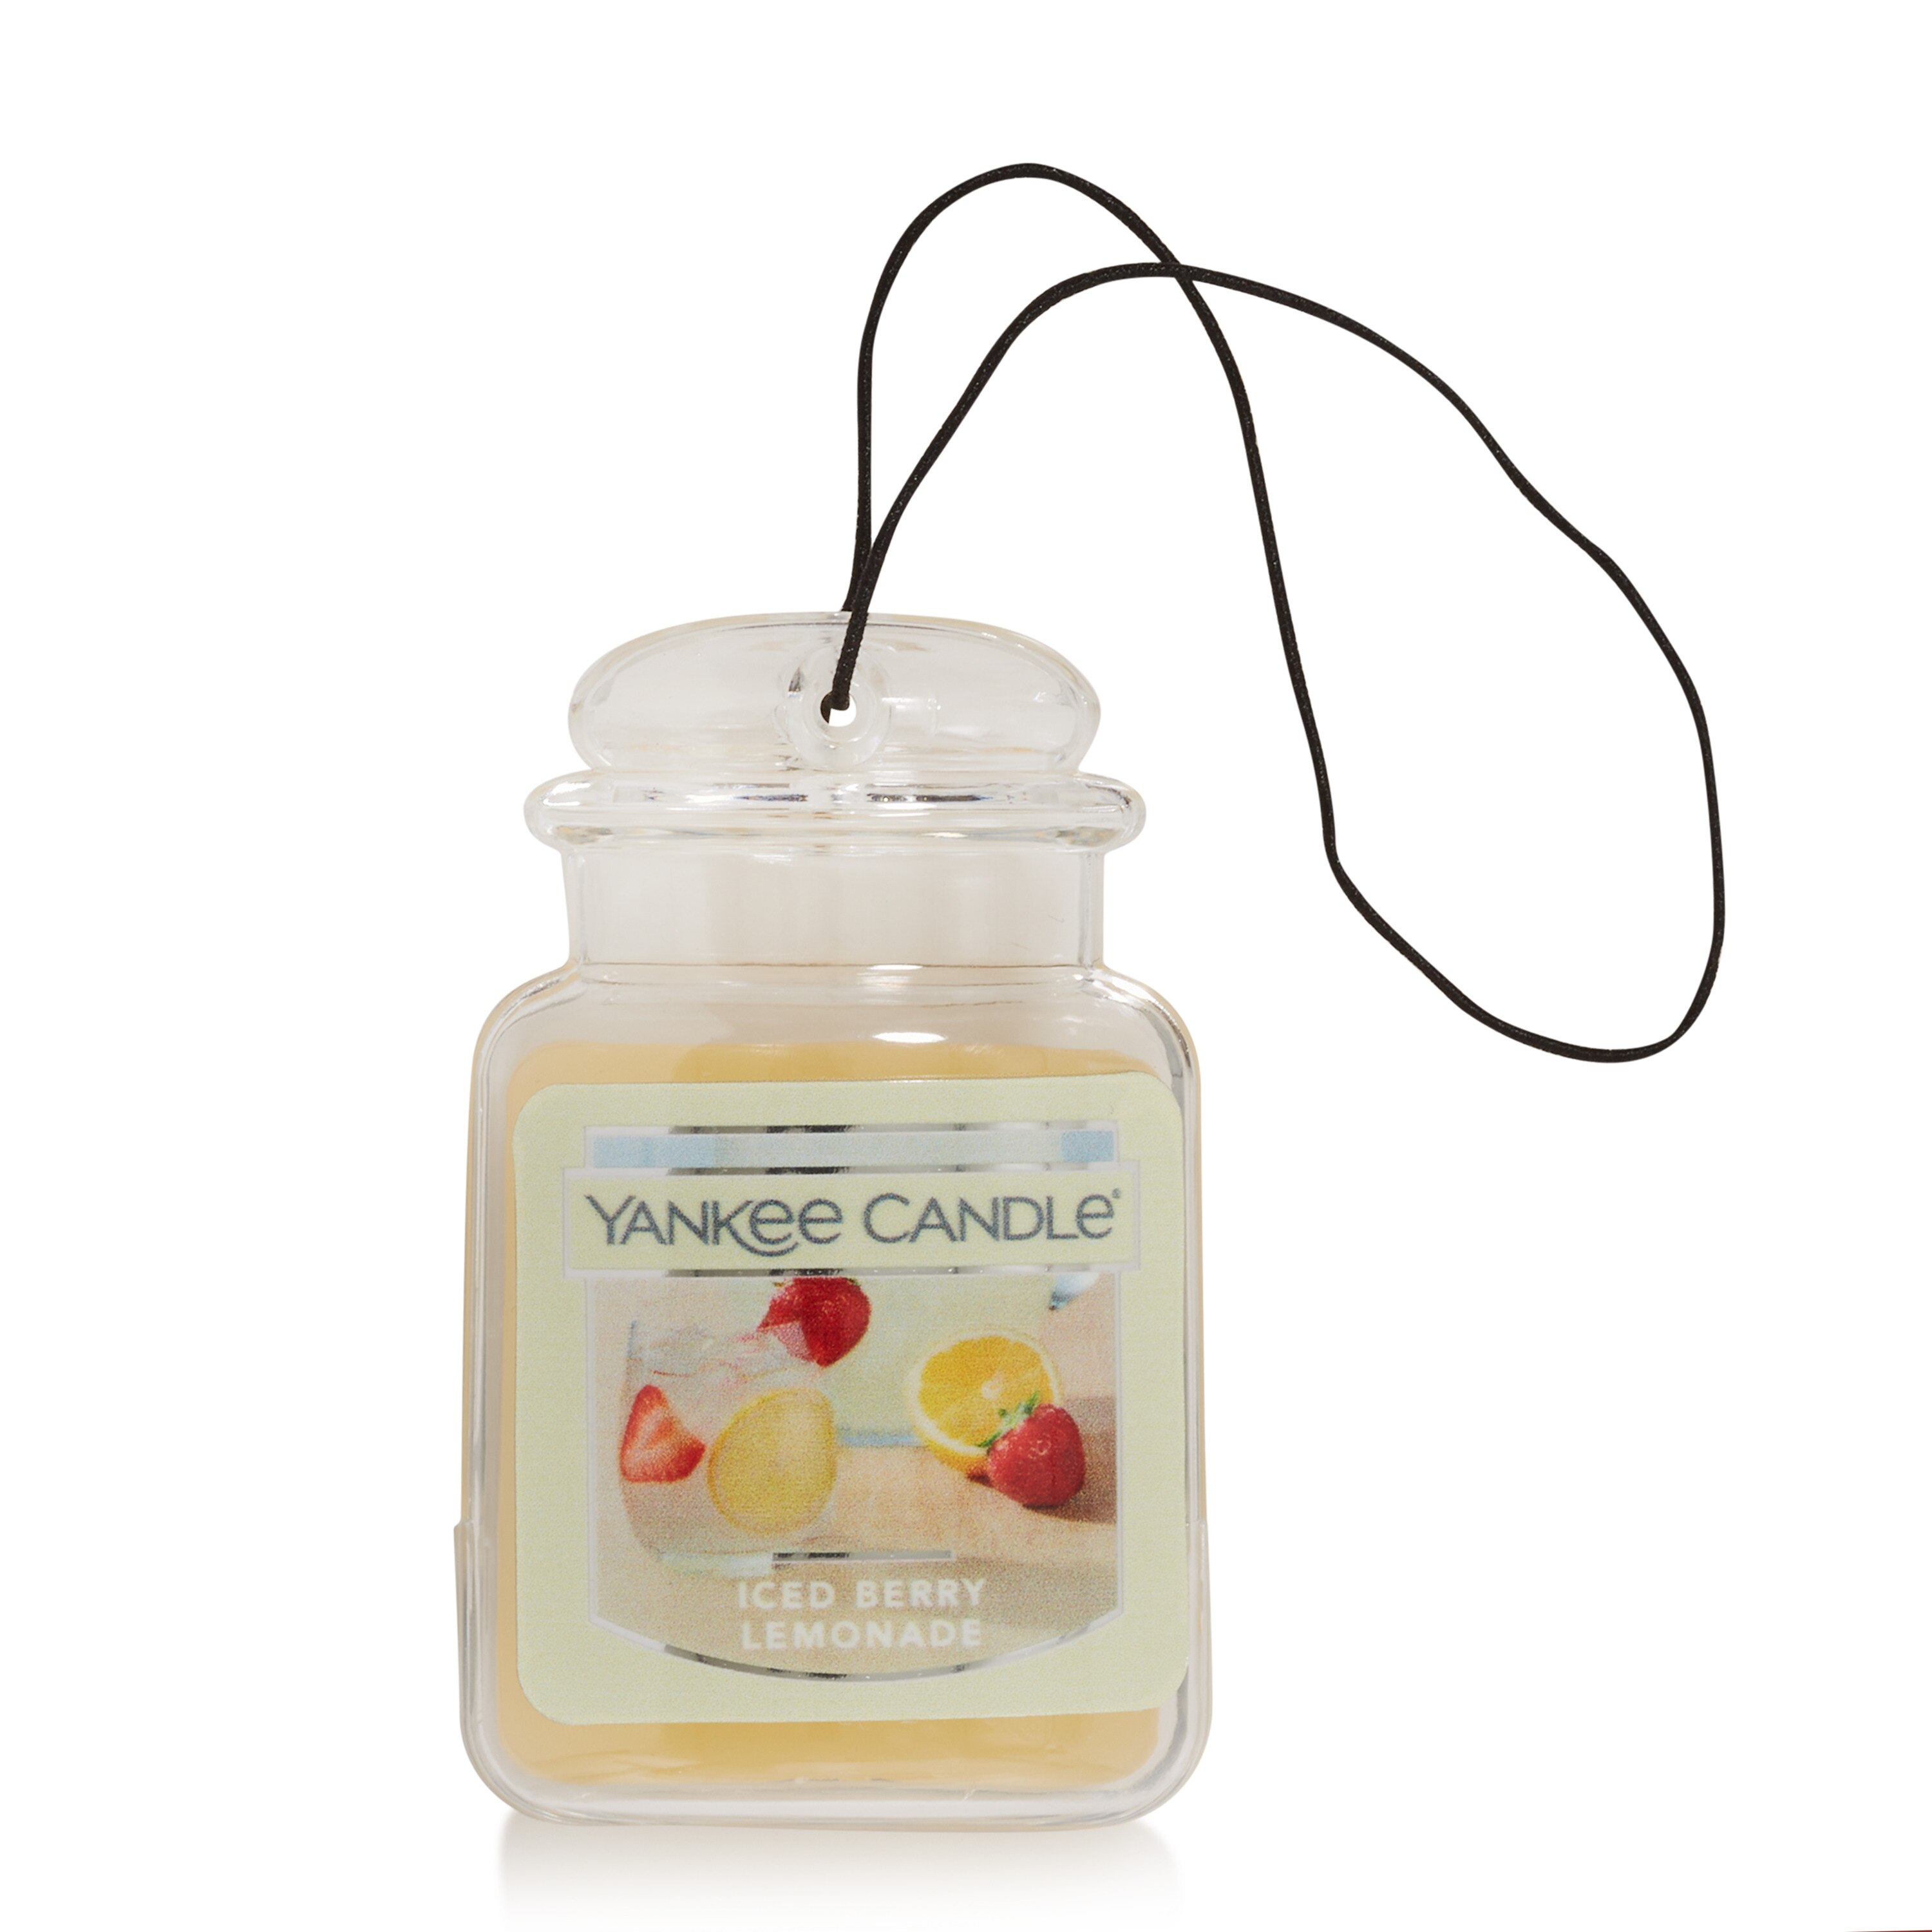 Yankee Candle Car Jar Ultimate Iced Berry Lemonade , CVS